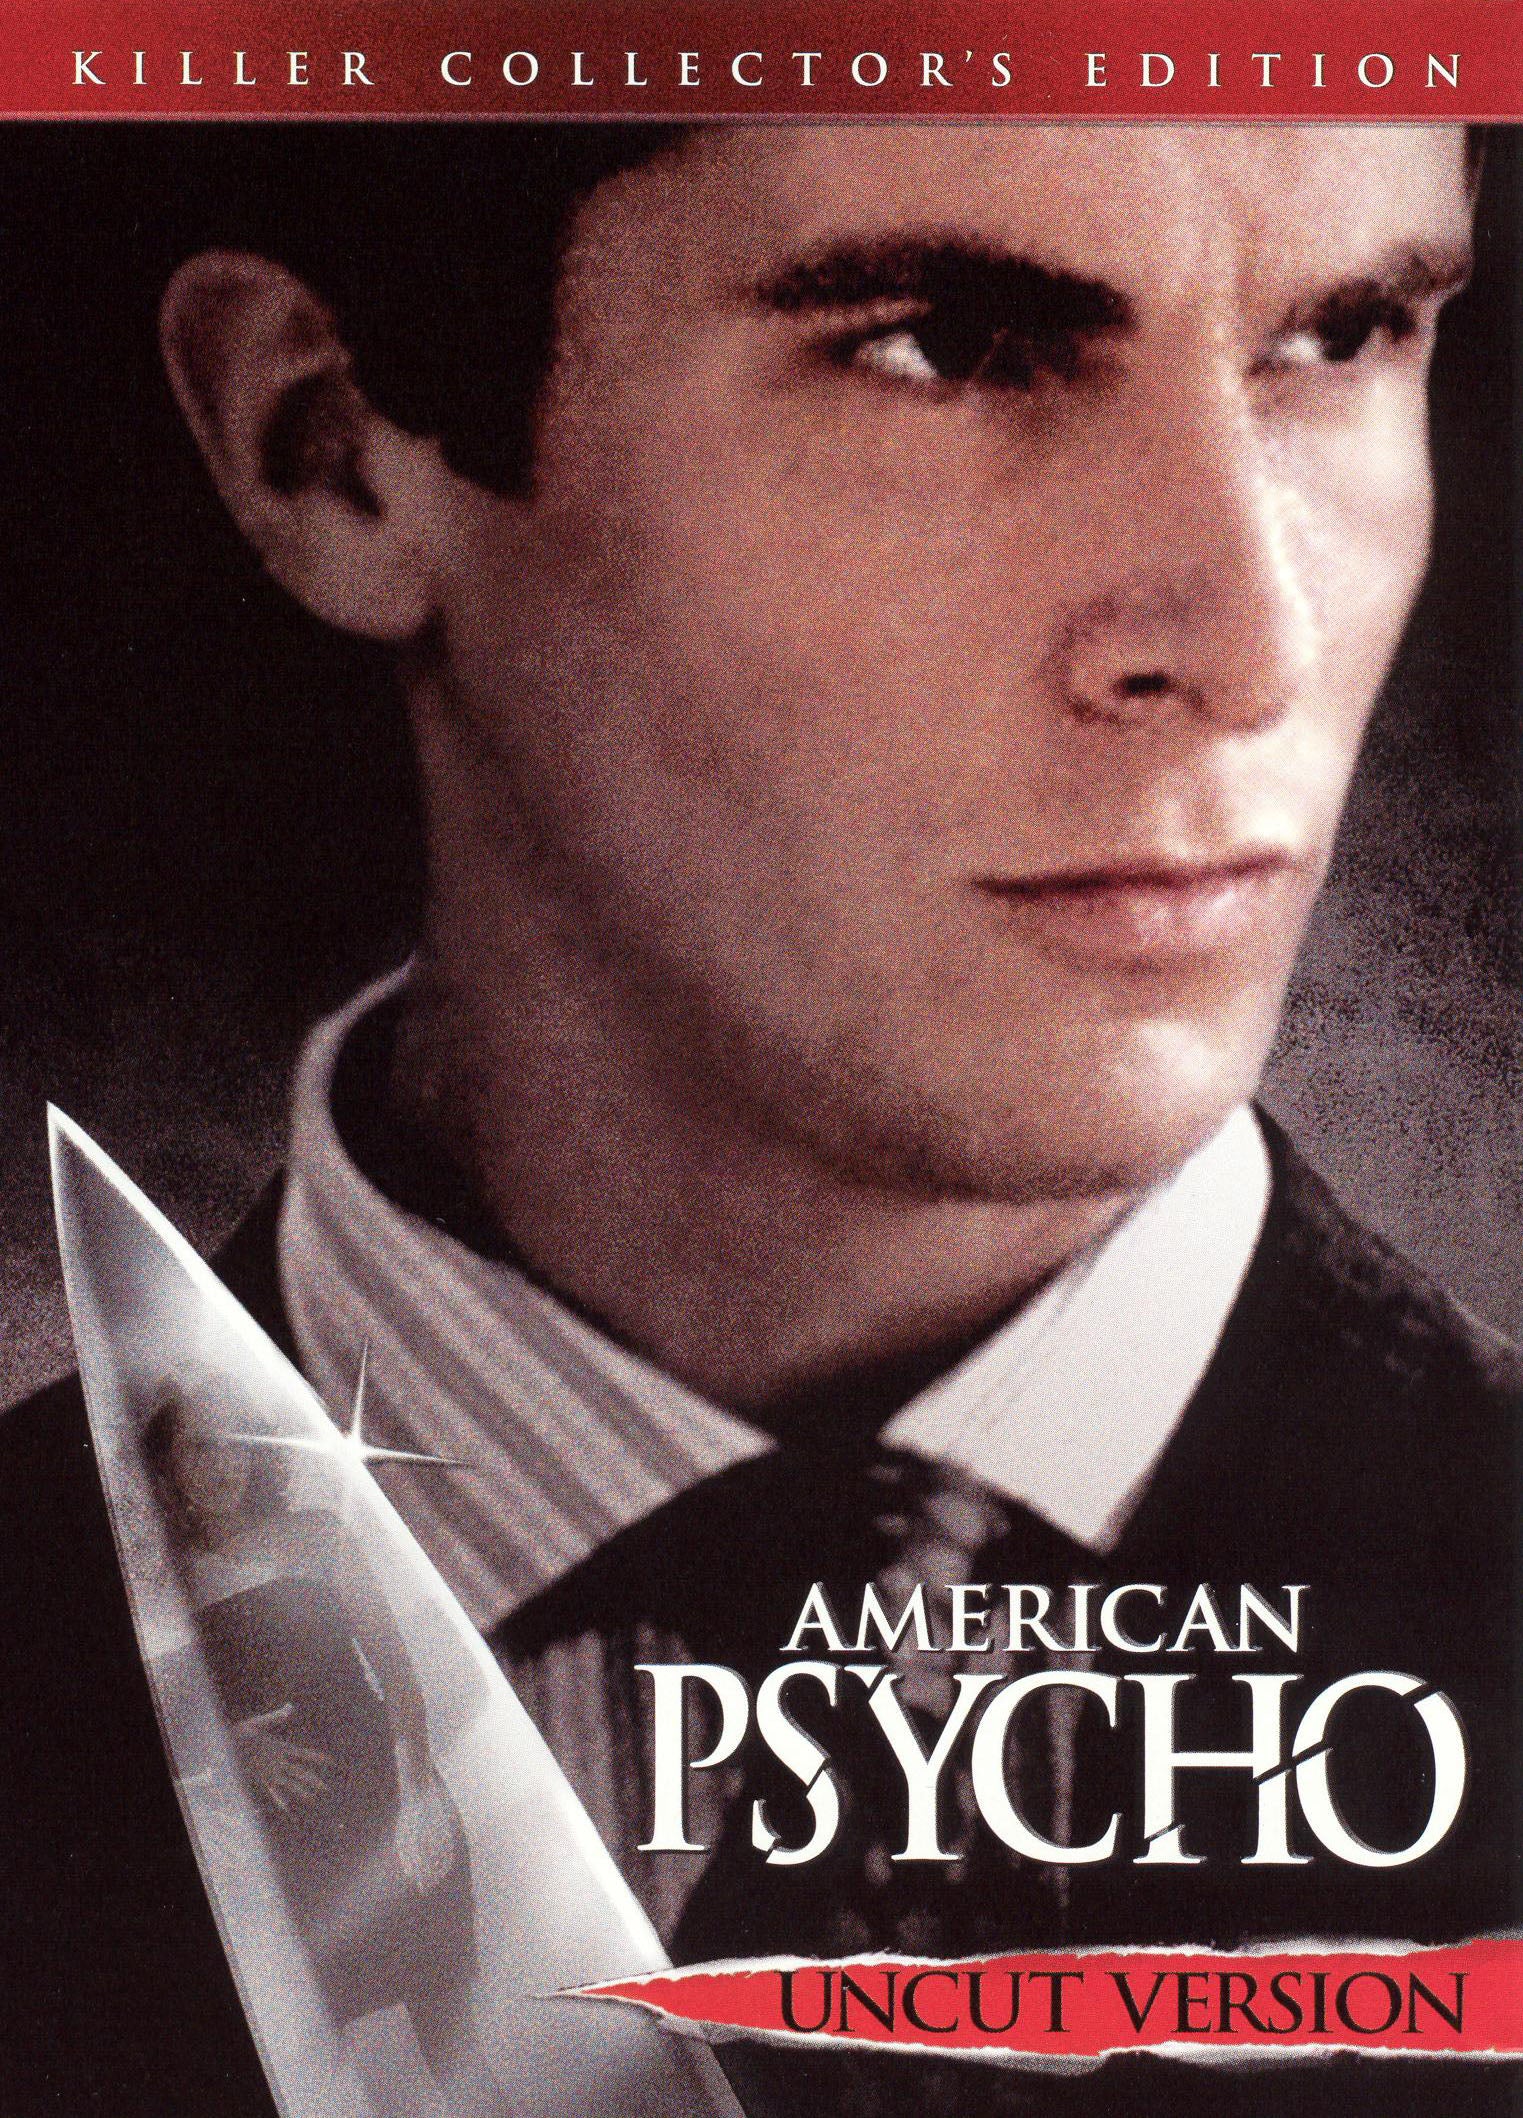 American Psycho [Killer Collector's Edition] cover art